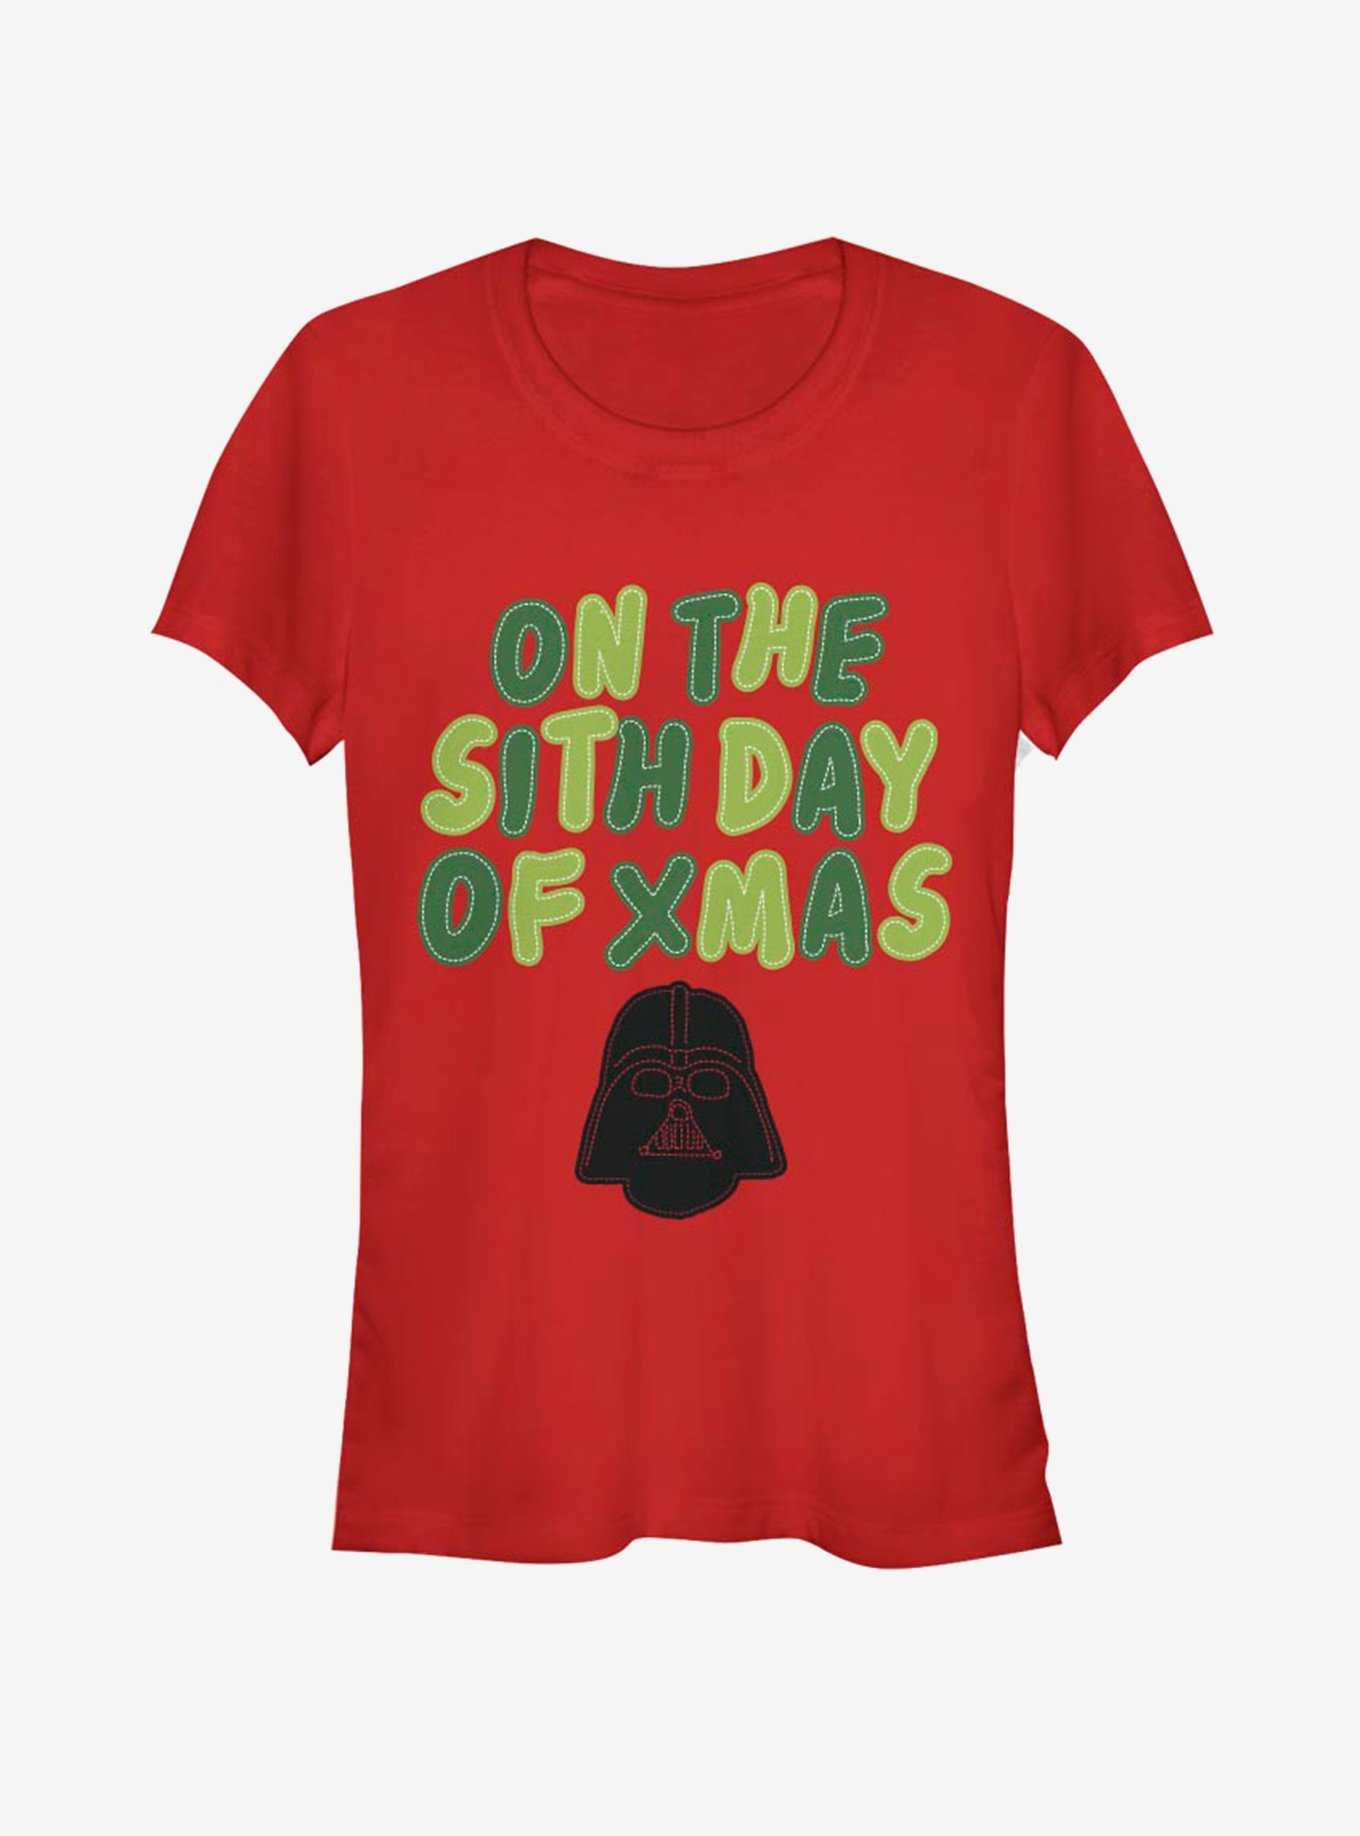 Star Wars Sith Day Girls T-Shirt, , hi-res